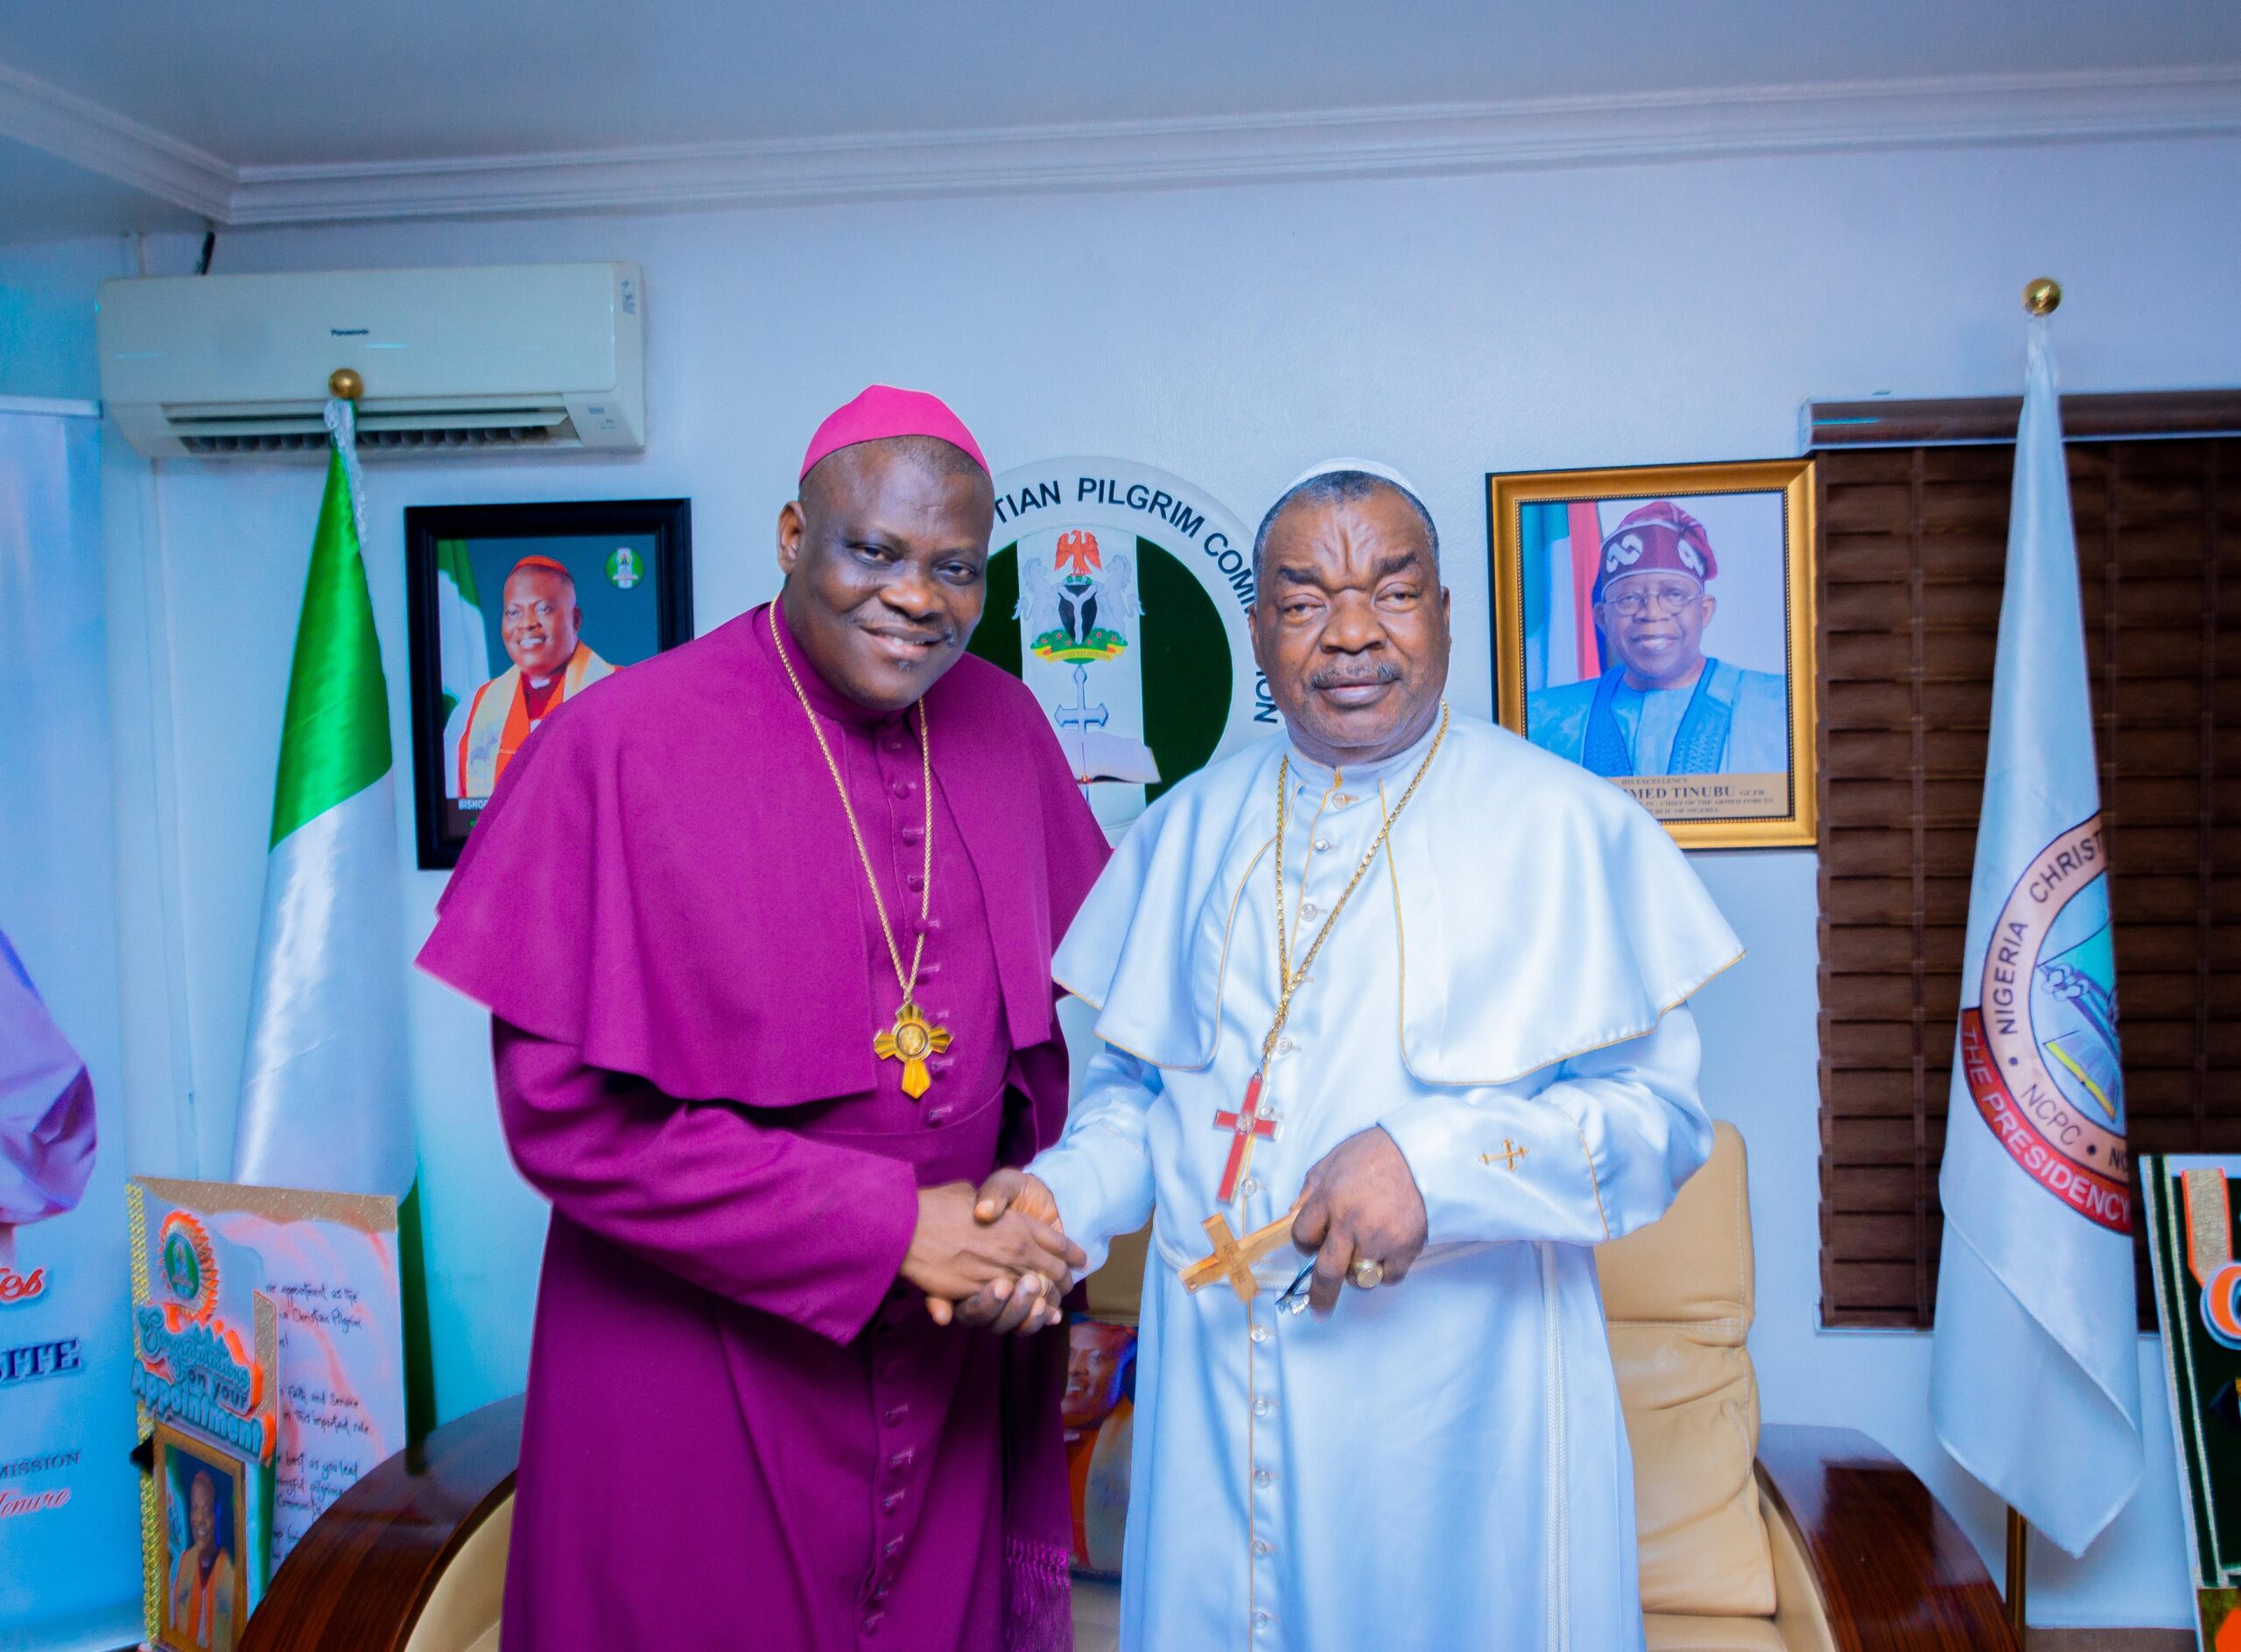 “There Will Be Zero Tolerance on Abscondment of Pilgrims” – NCPC Boss, Bishop Adegbite